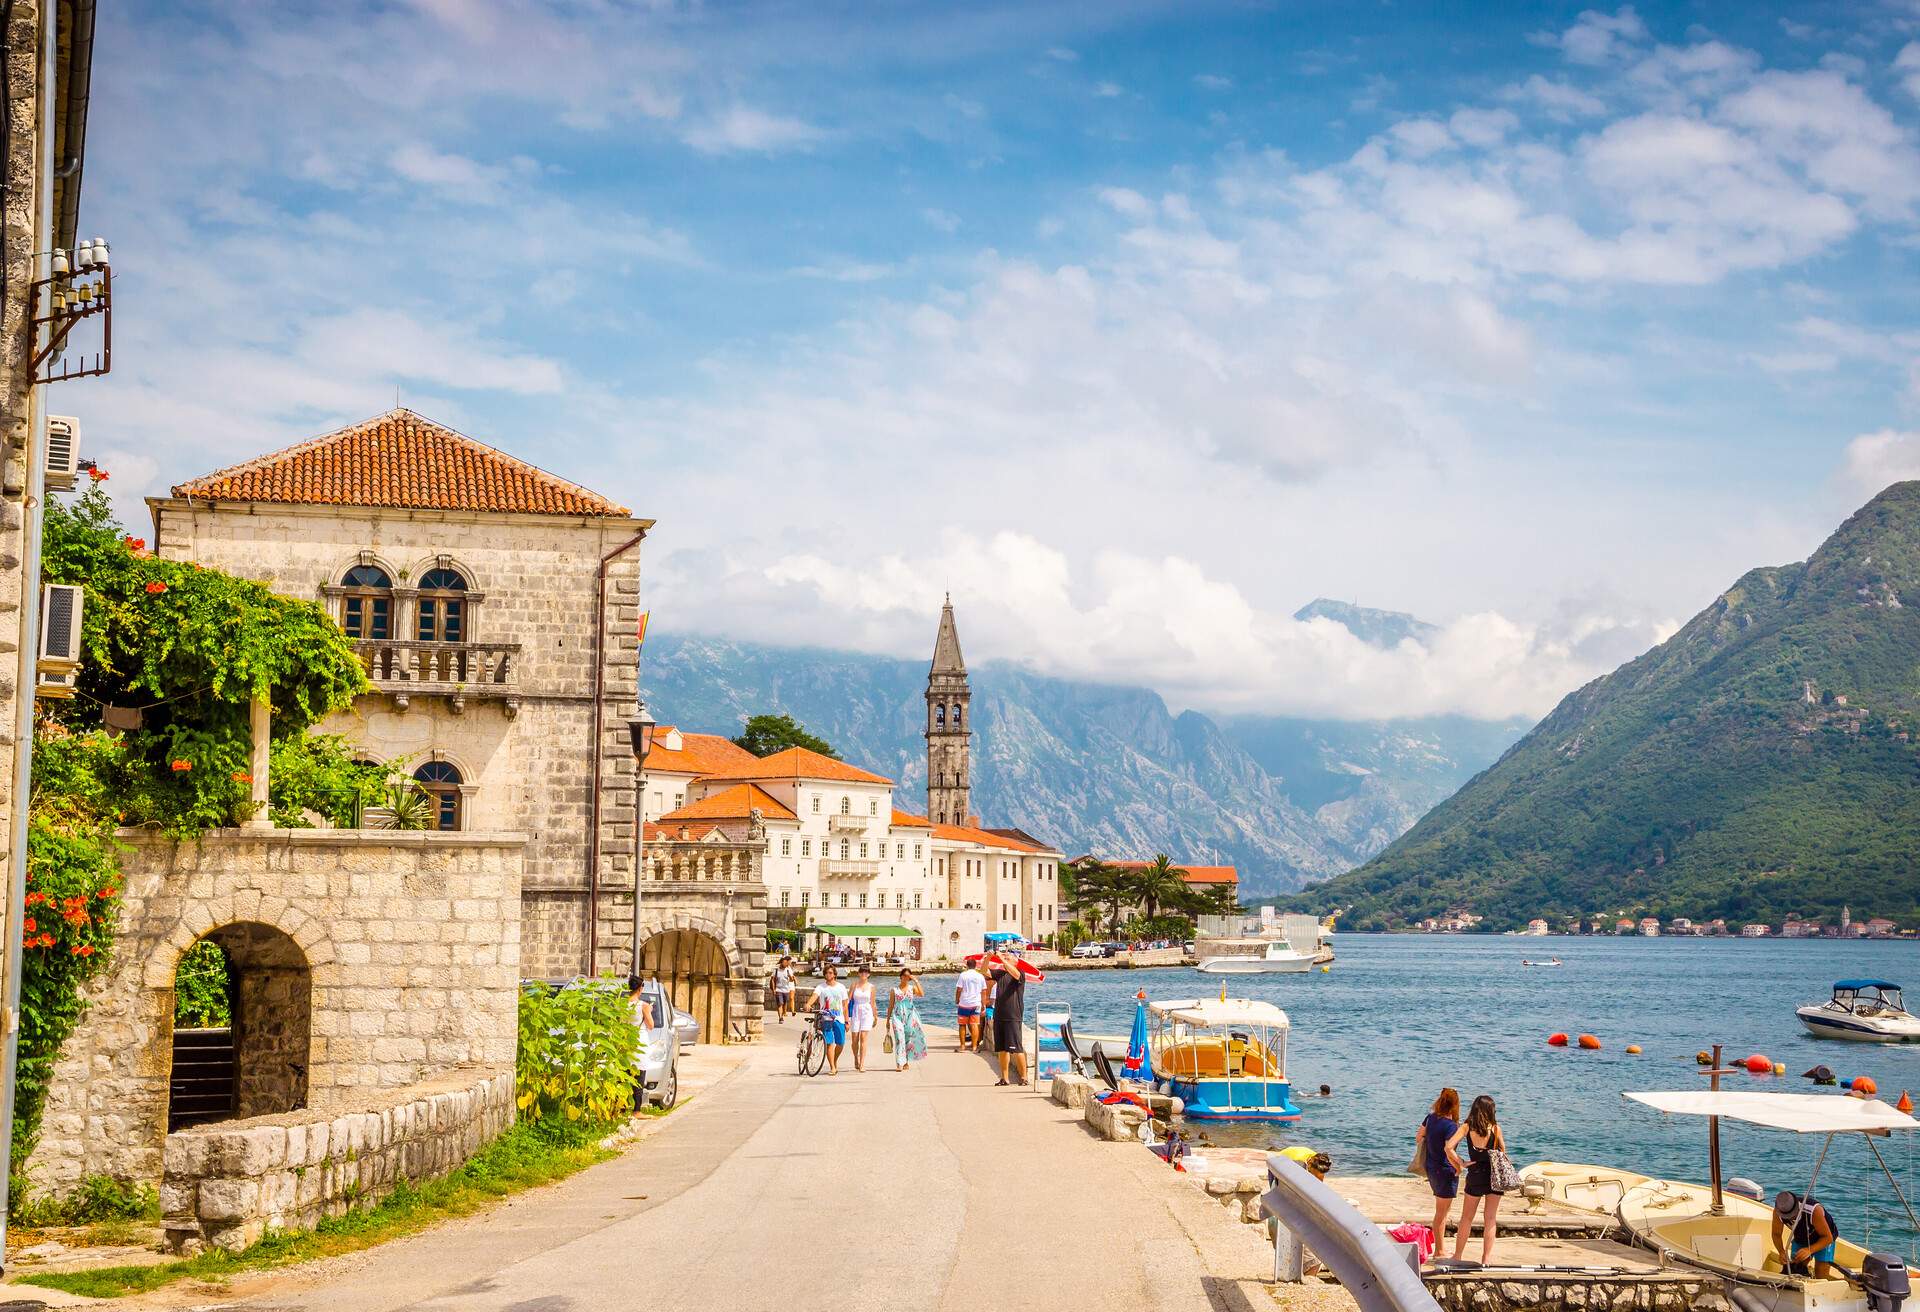 Beautiful mediterranean landscape - town Perast, Kotor bay (Boka Kotorska), Montenegro.; Shutterstock ID 787446055